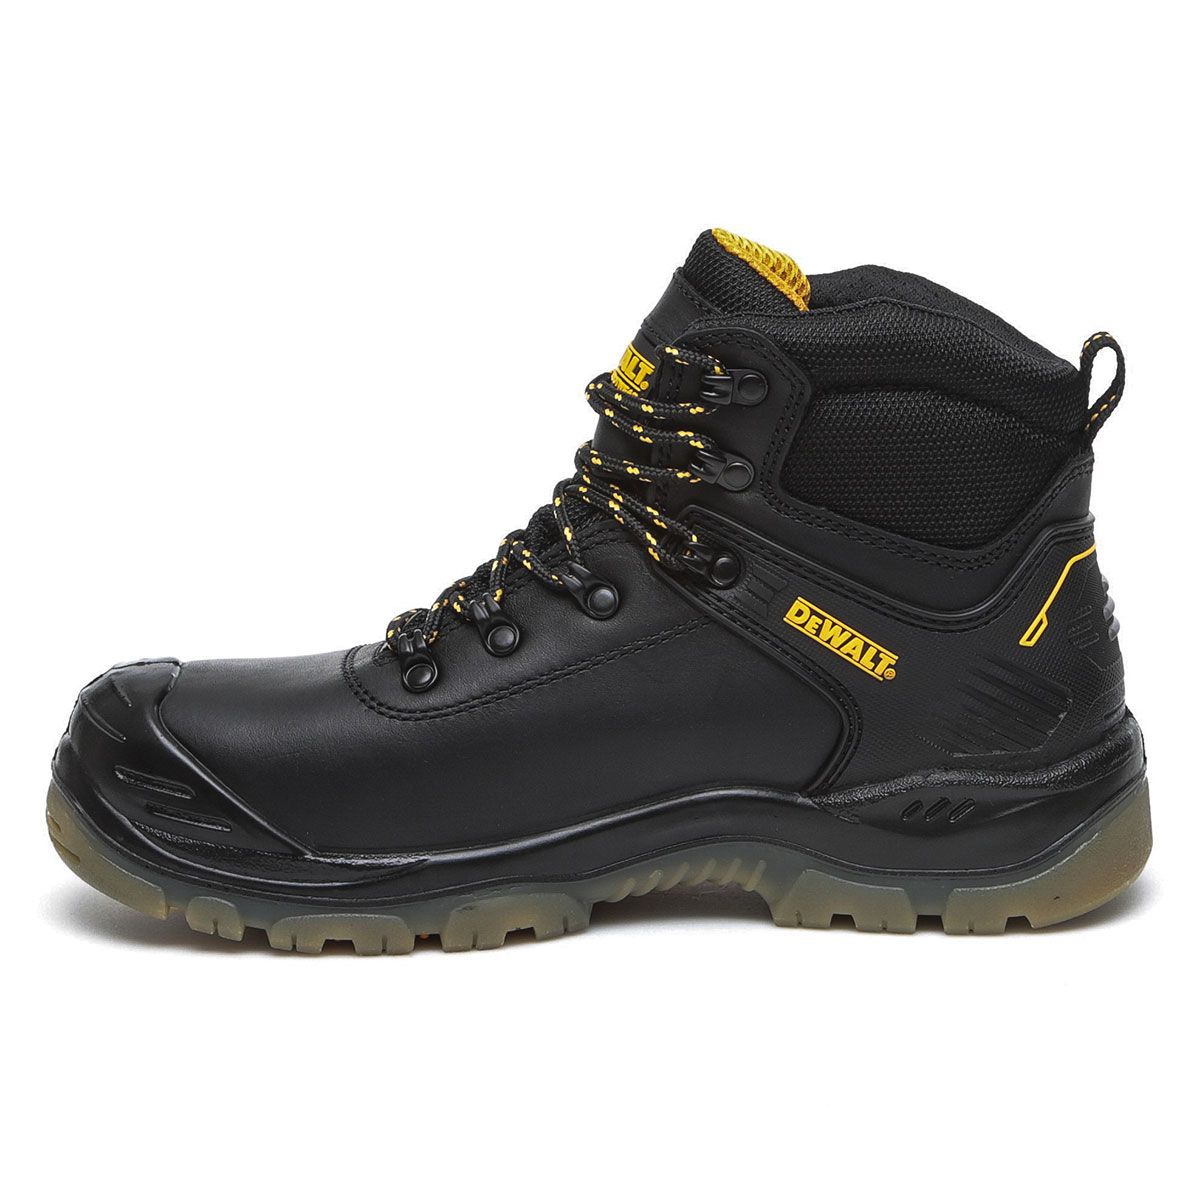 DeWalt Newark Men's Black Safety boots, Size 8